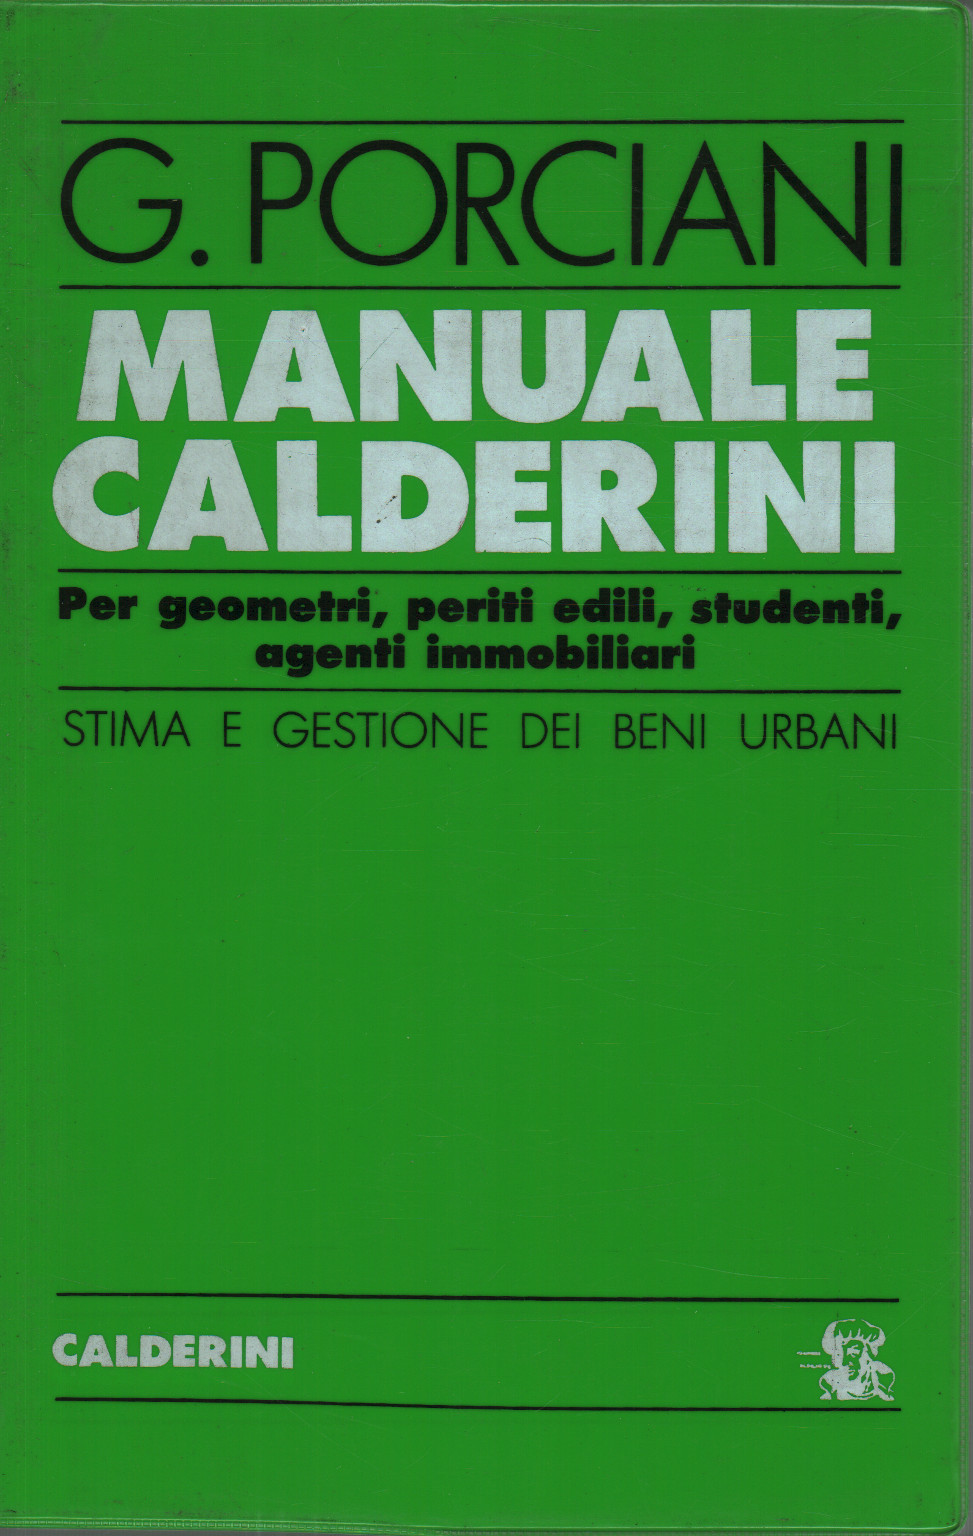 Manuale Calderini, s.a.